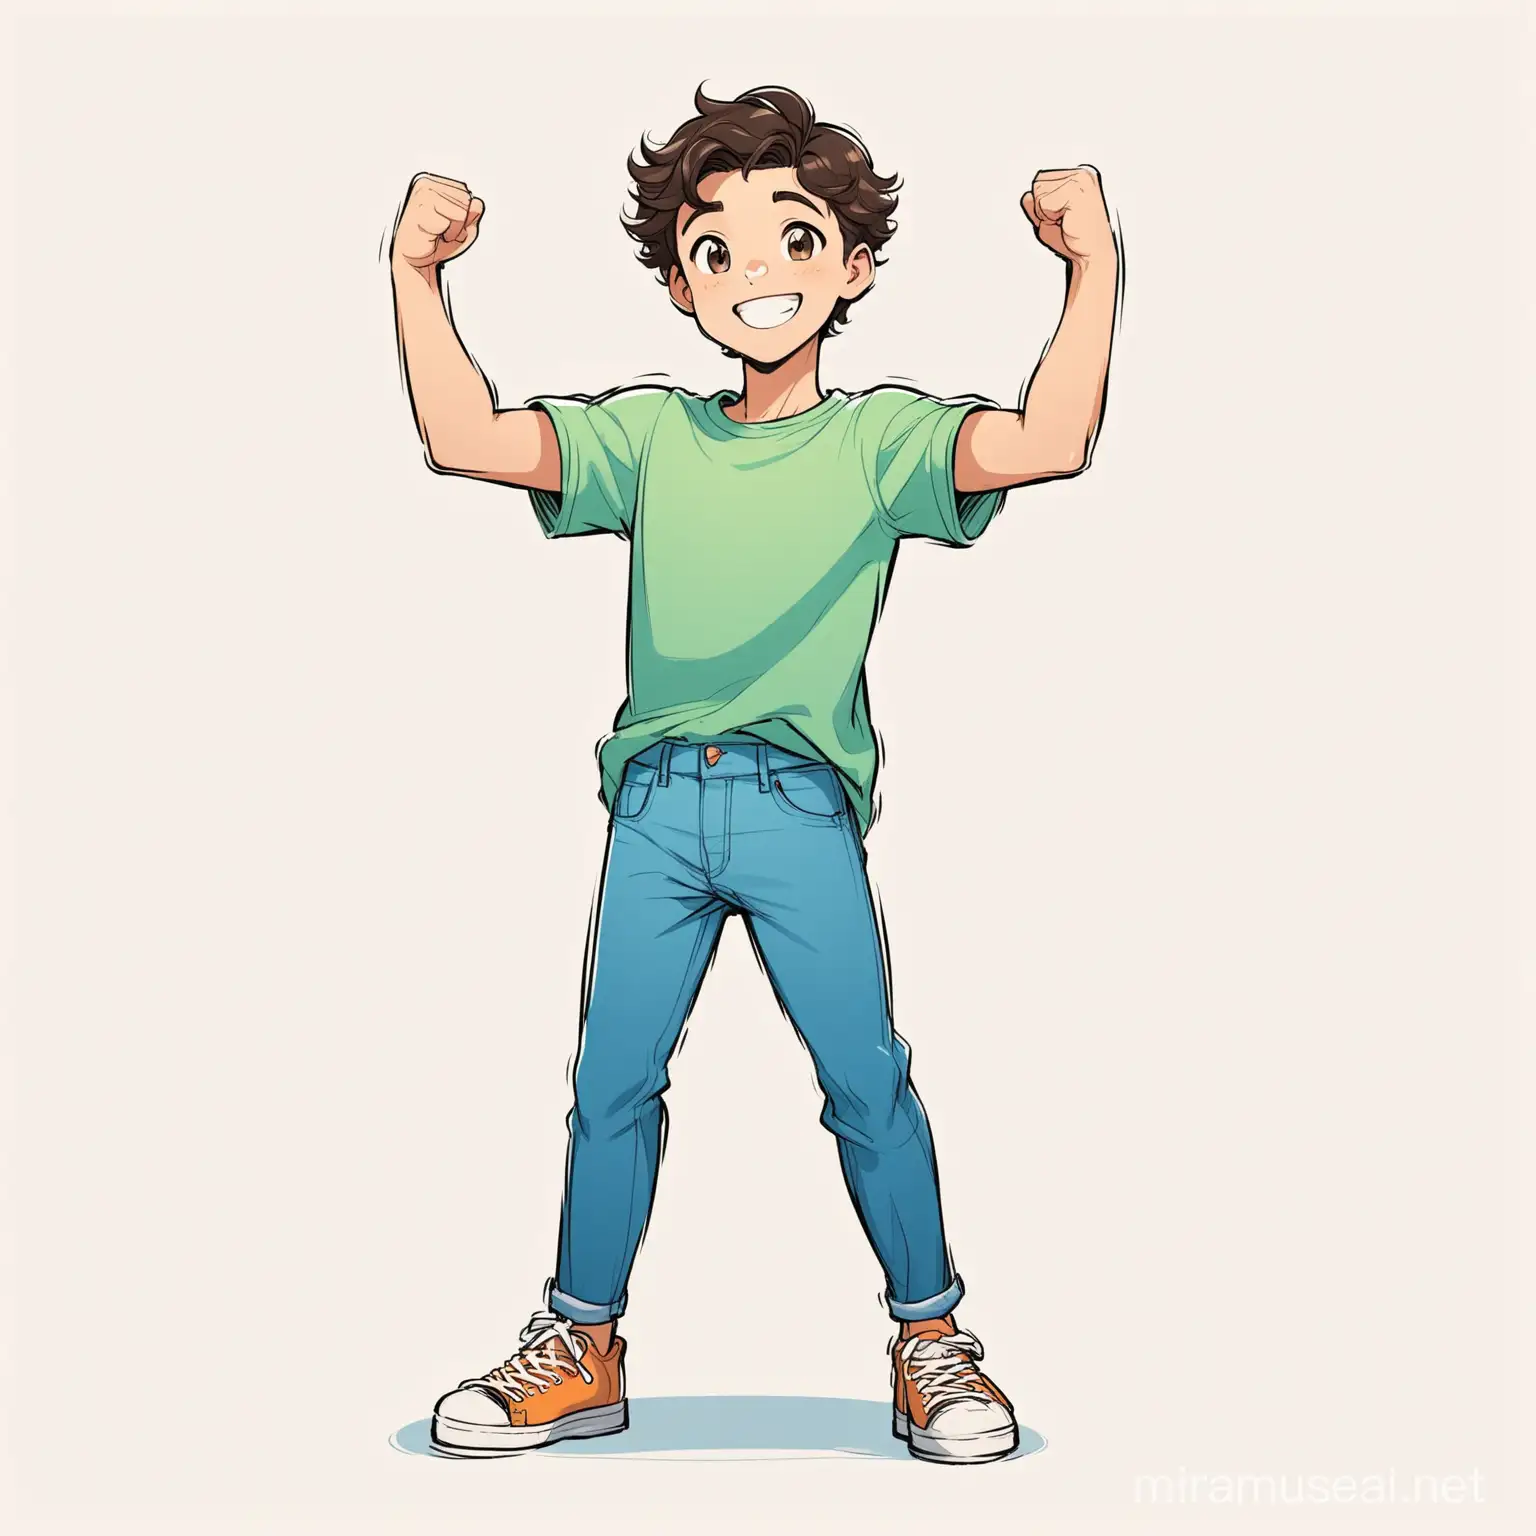 Cheerful Teenage Boy in Casual Attire Disney Style Illustration